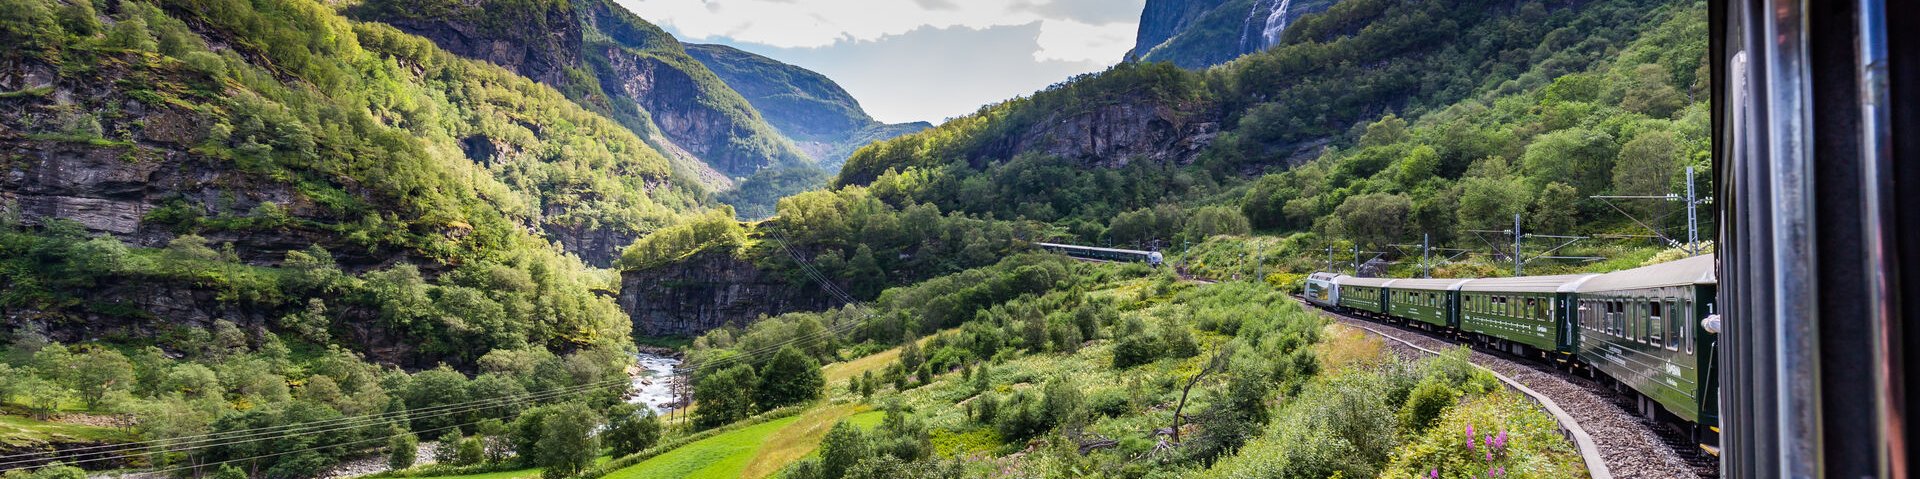 Blick aus der Flamsbahn in Norwegen